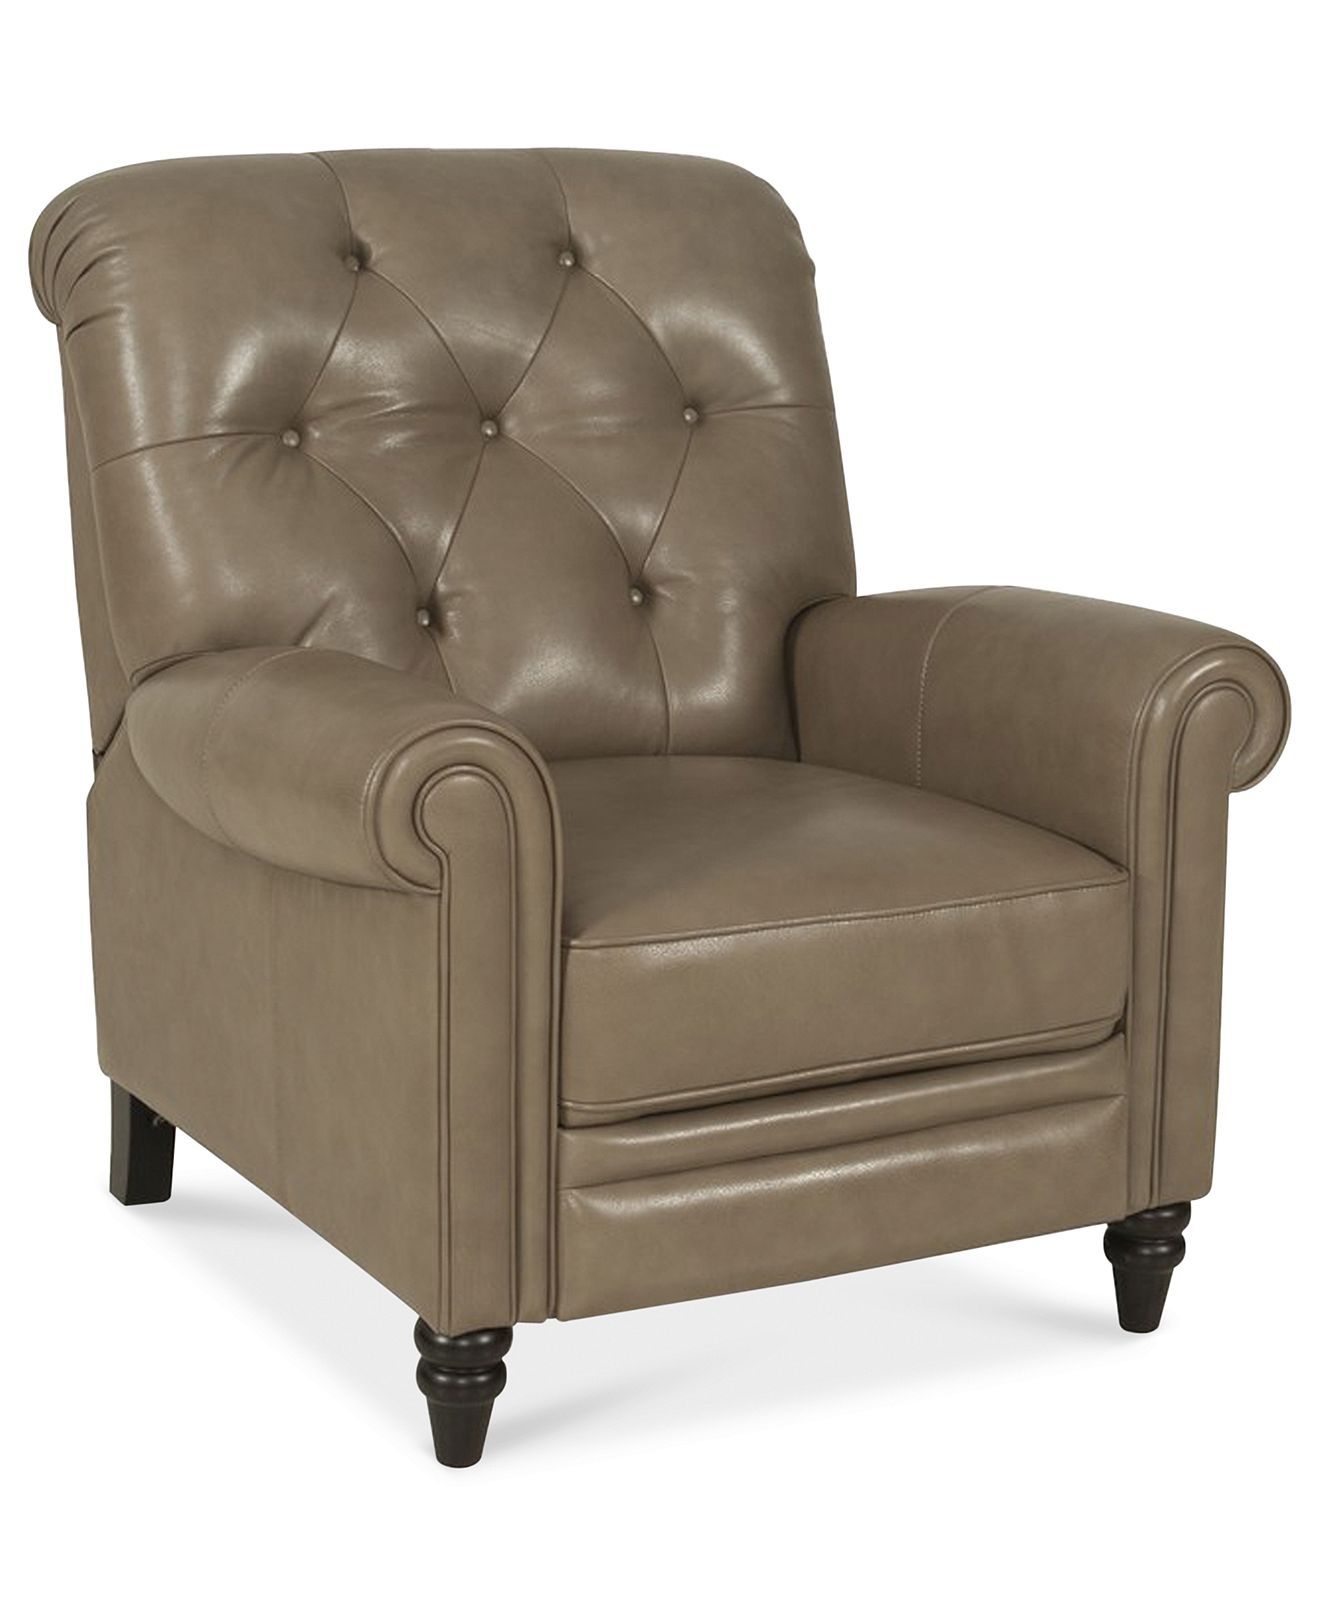 Martha stewart collection leather recliner chair bradyn 36 w x